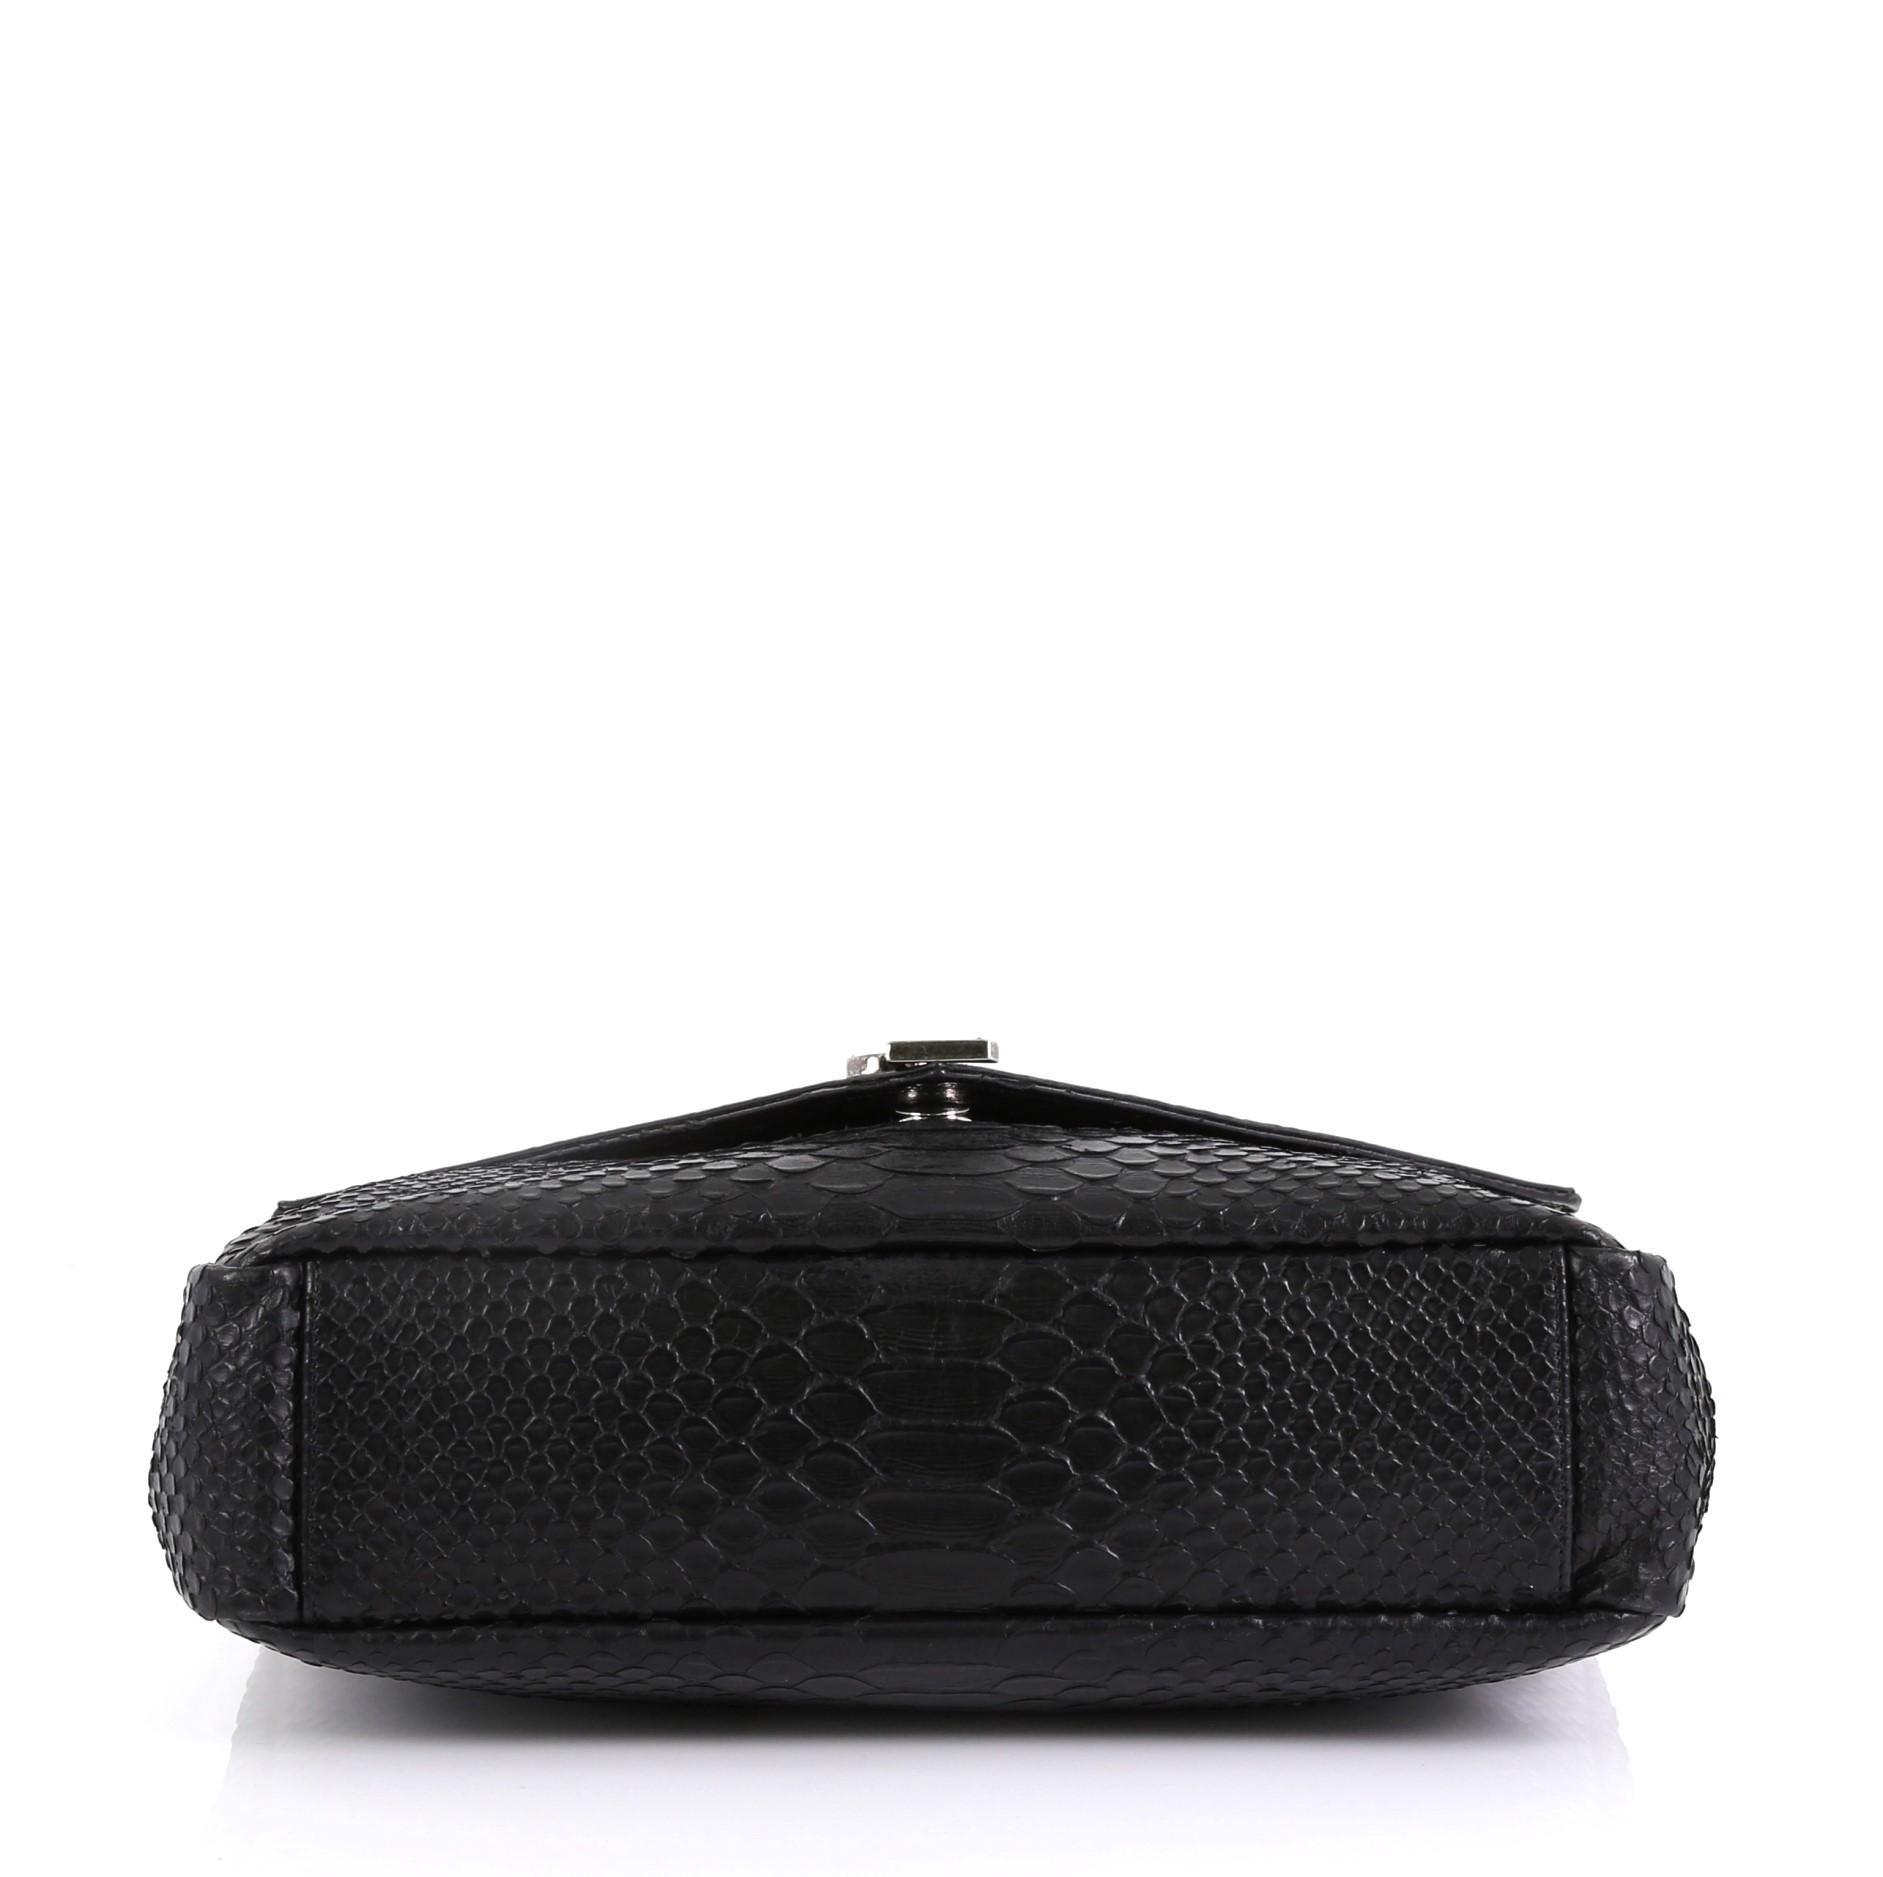 Black Saint Laurent Classic Monogram College Bag Python Embossed Leather Large